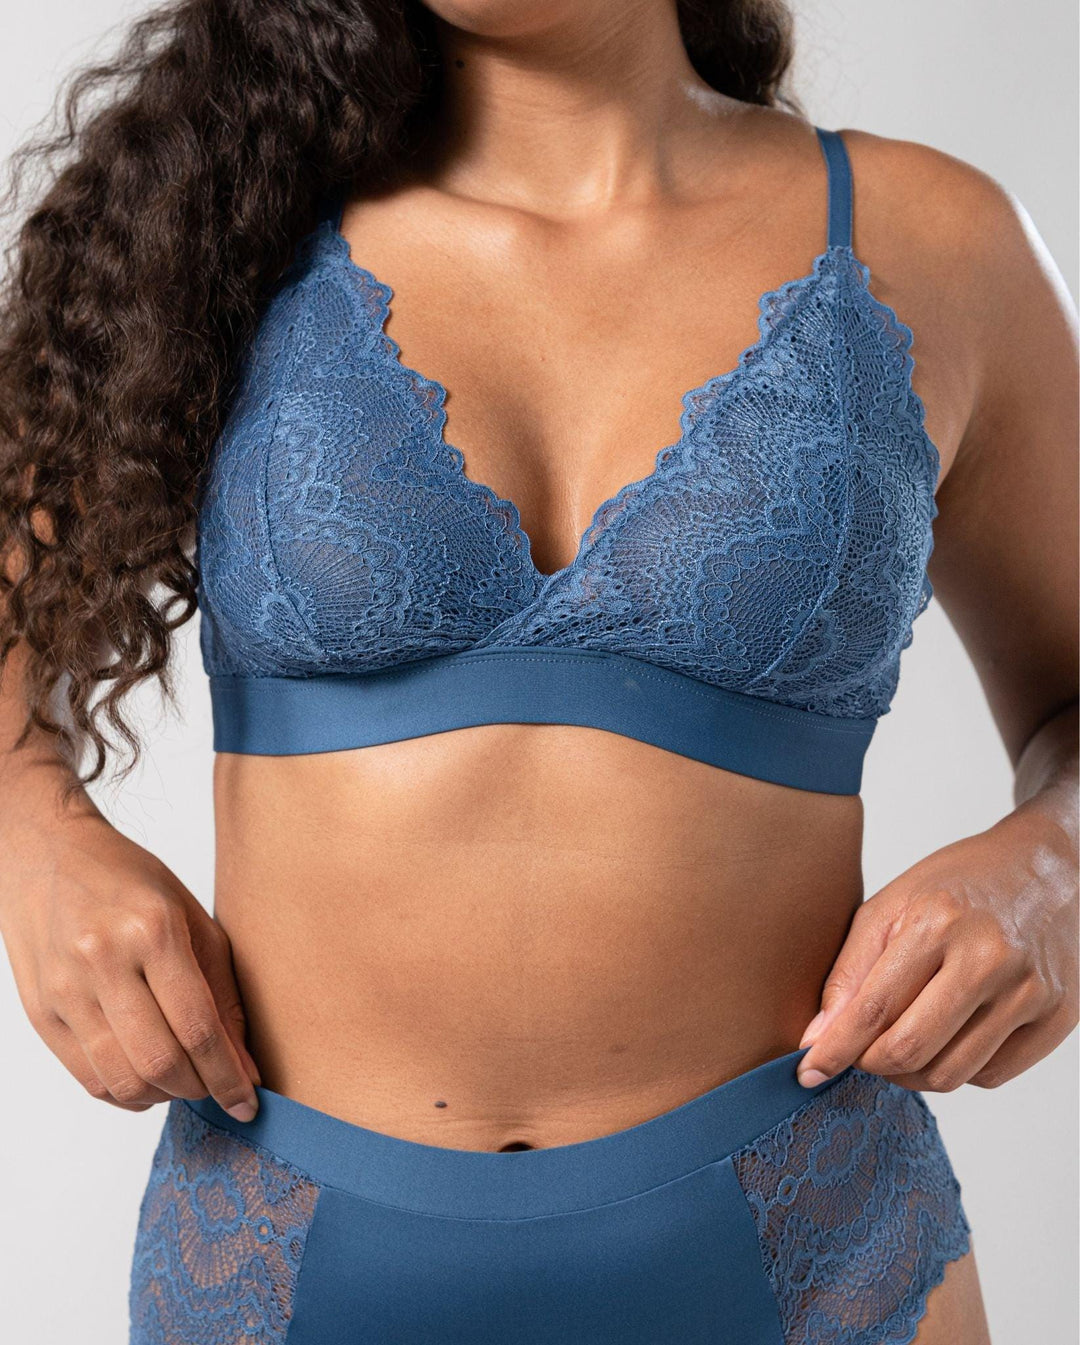 Wholesale 30 no bra size For Supportive Underwear 